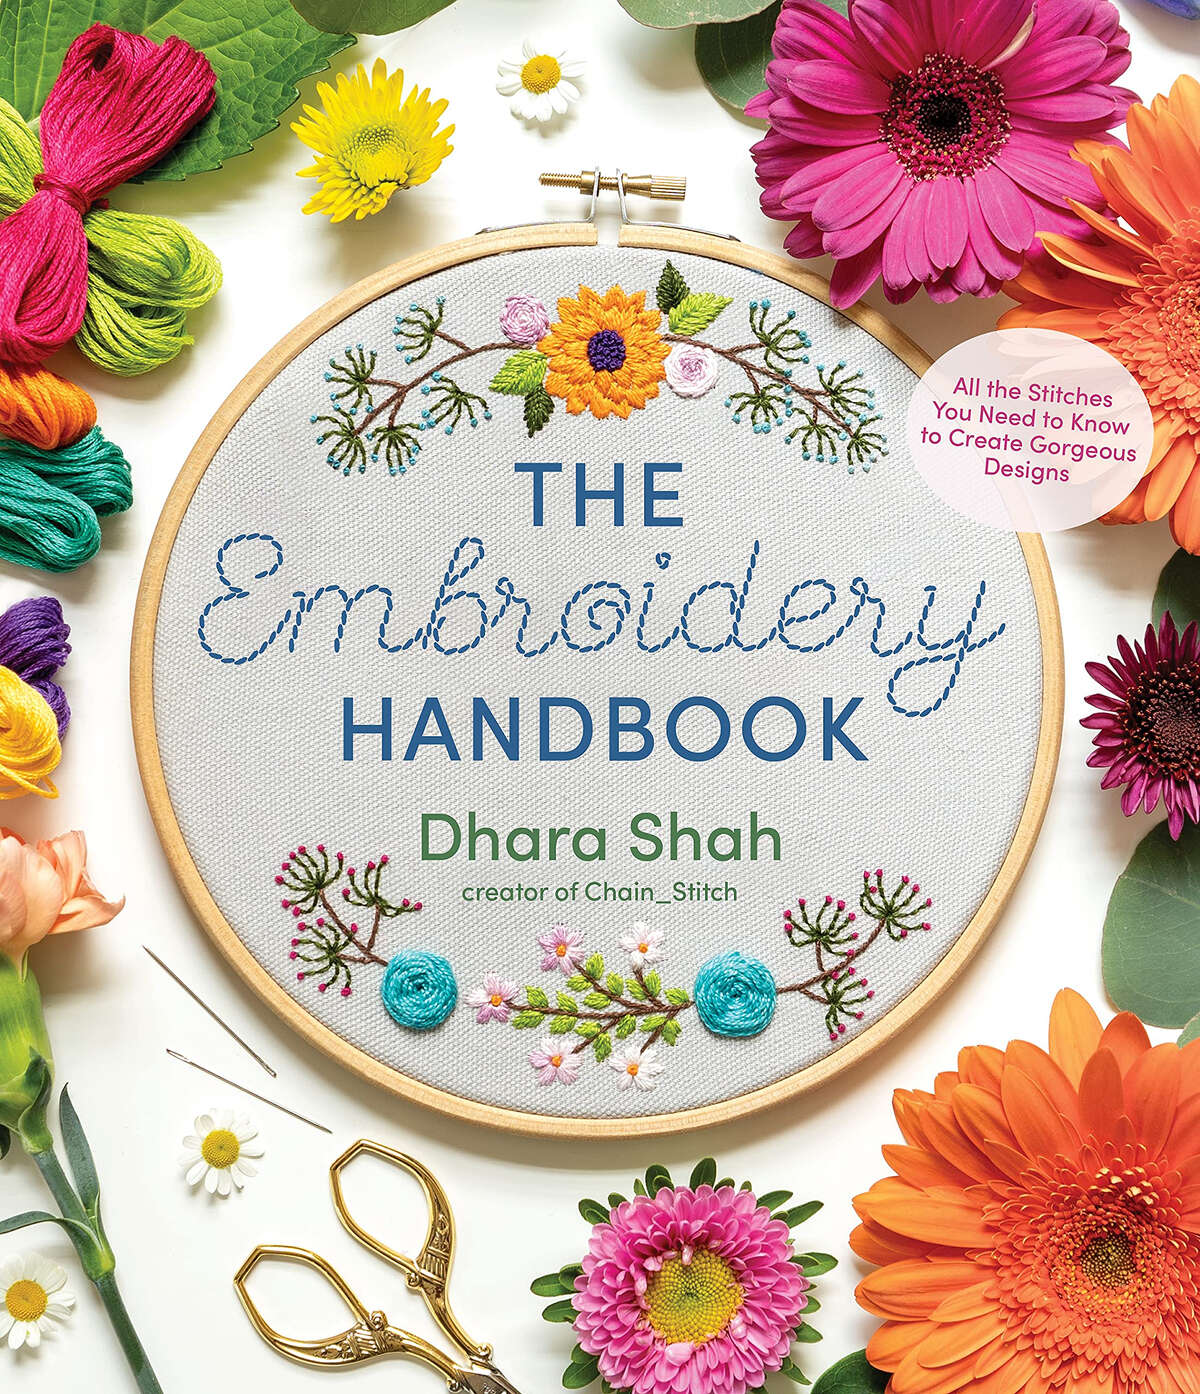 "The Embroidery Handbook"